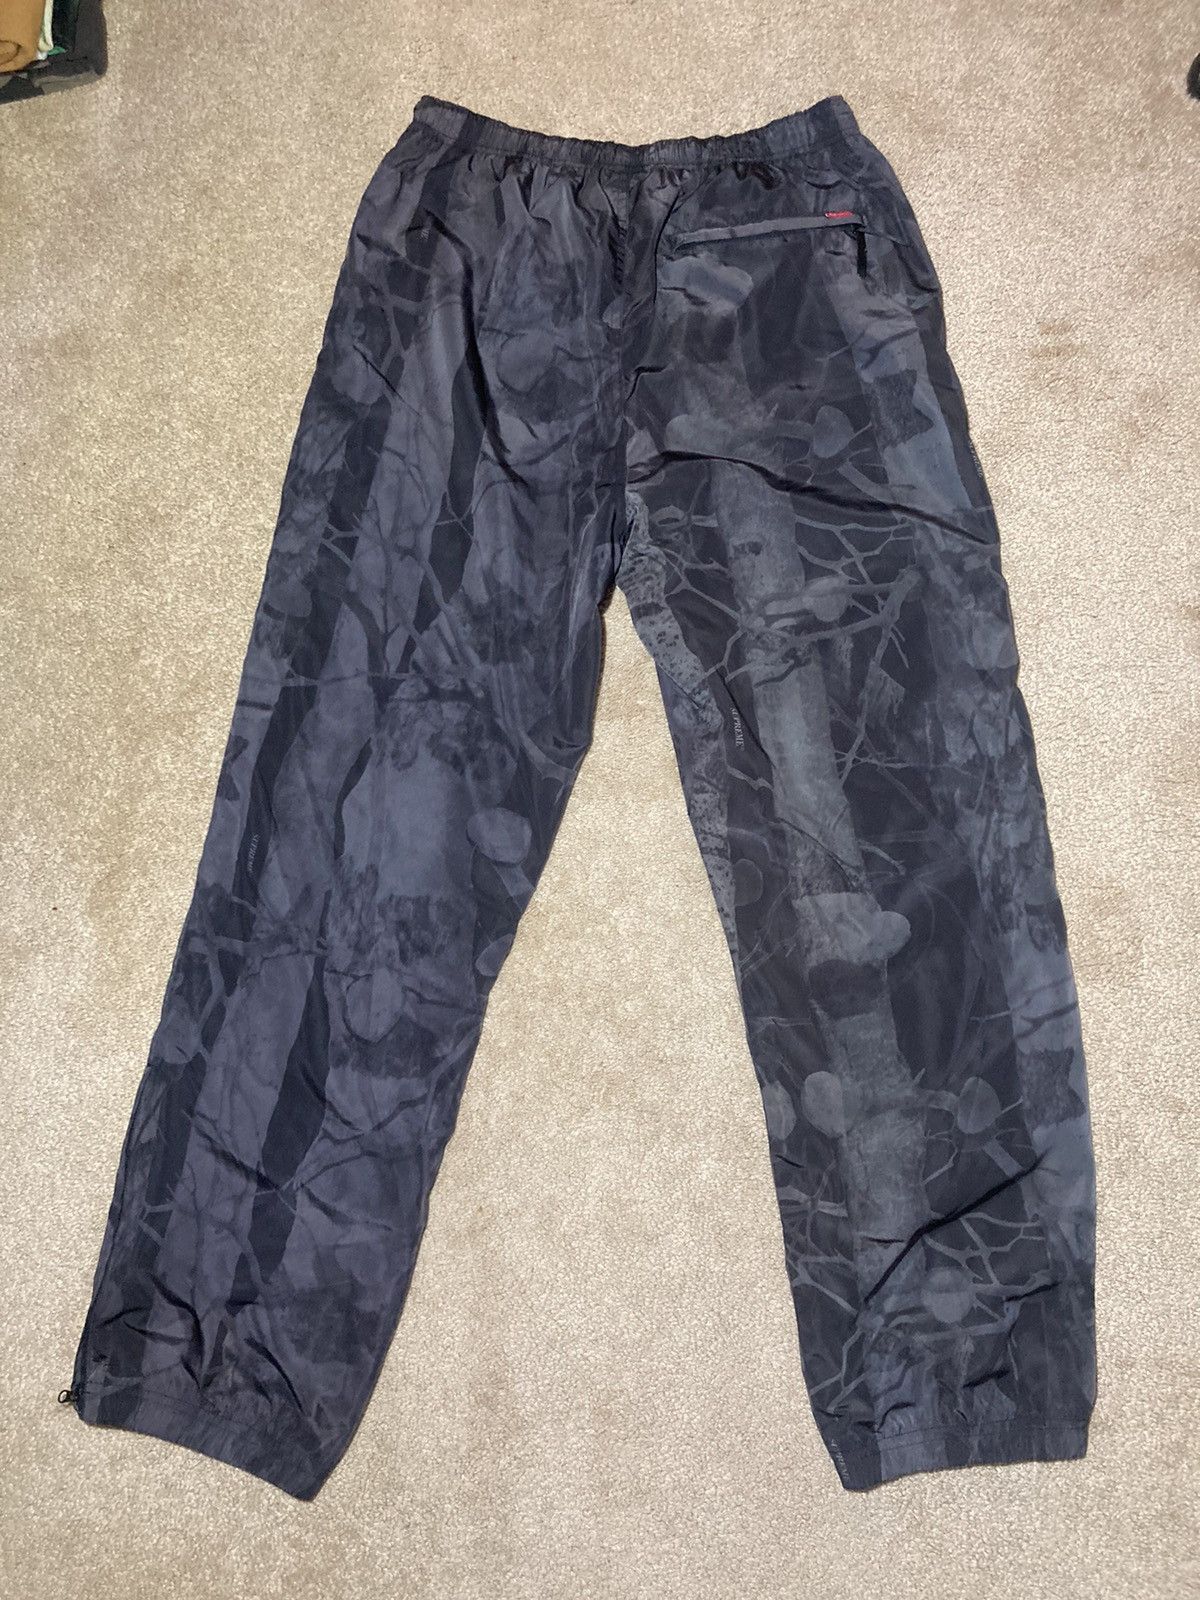 SS14 Supreme Aspen Camo Pants Woodland Camouflage 2014 Track - 8